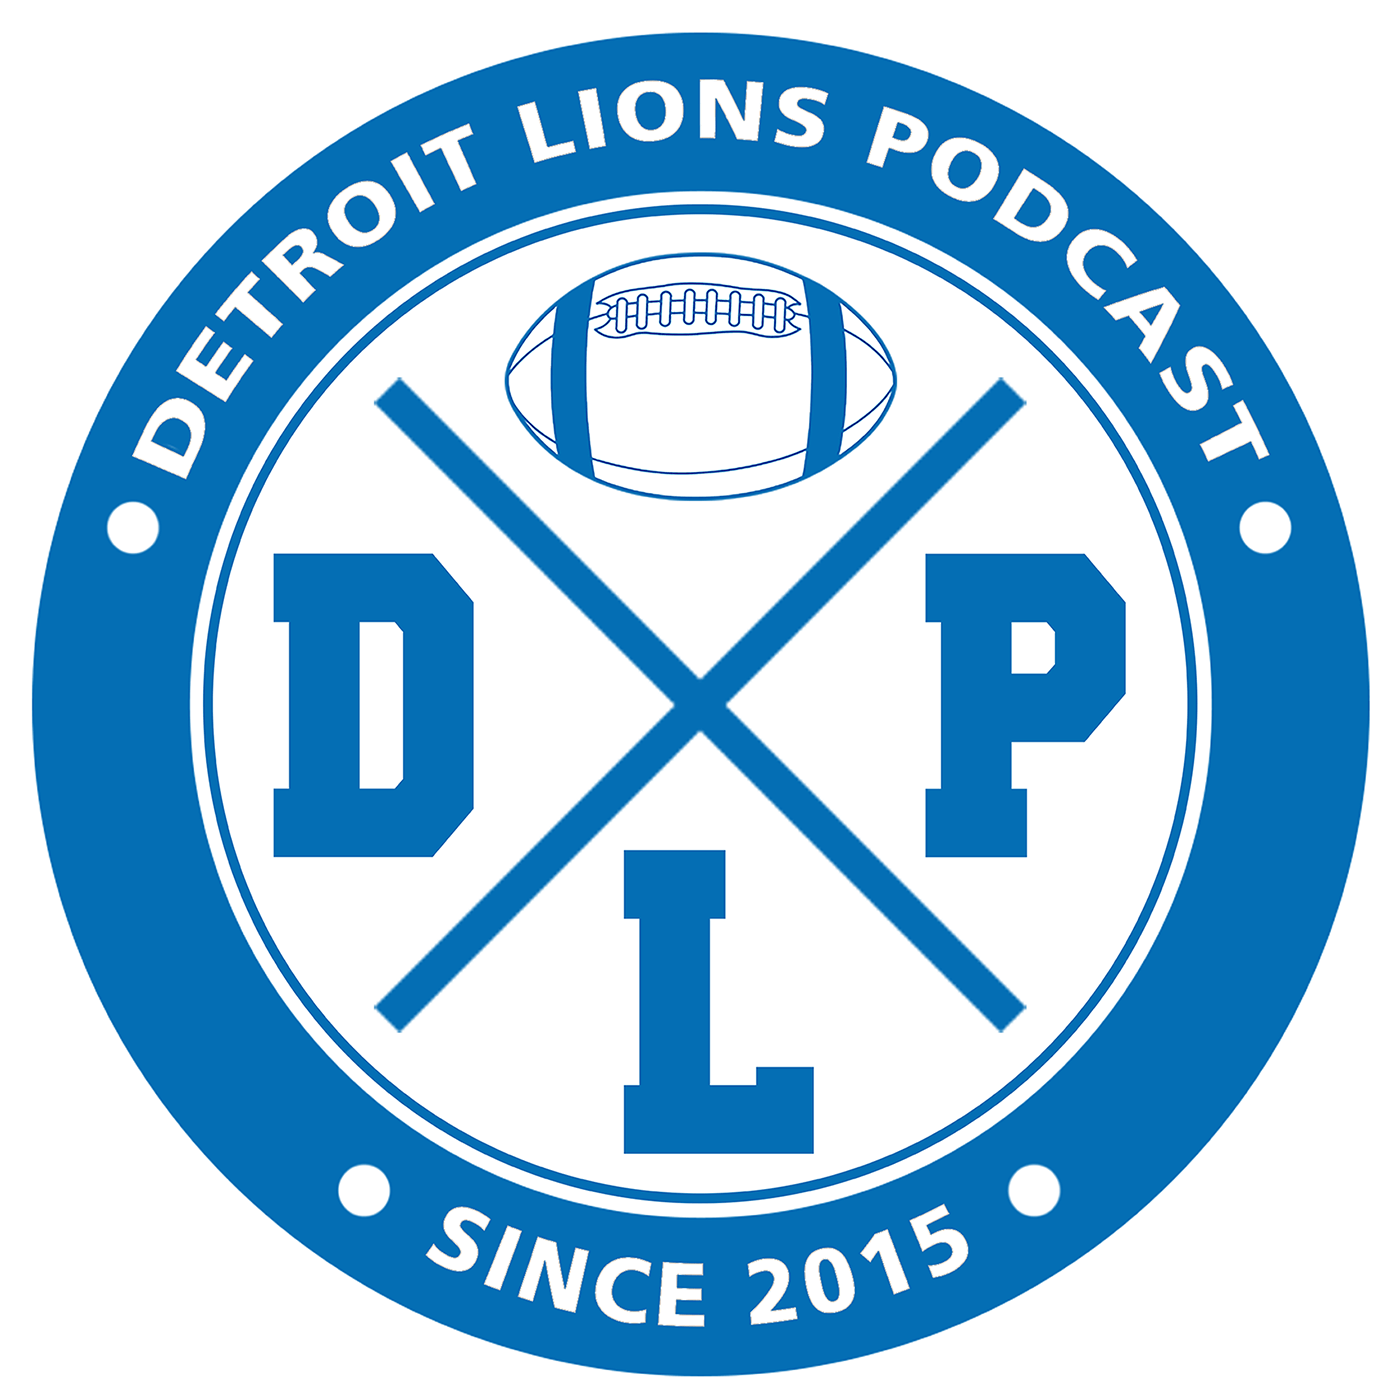 Jeff Risdon's Post Draft mailbag | Detroit Lions Podcast